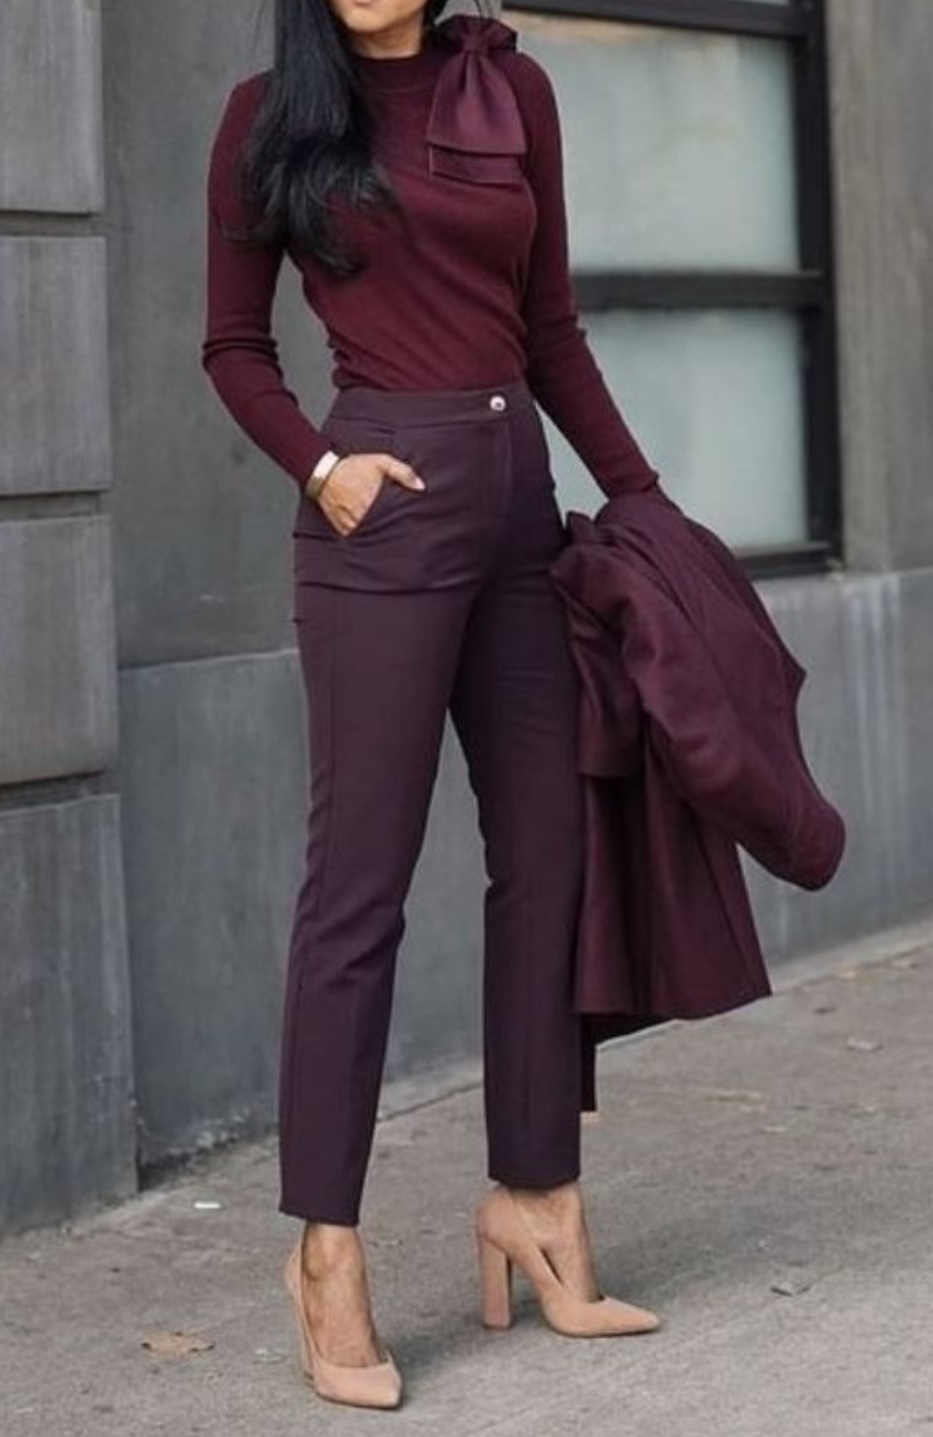 Business casual dress code guide for women - Emma.FashionEmma.Fashion